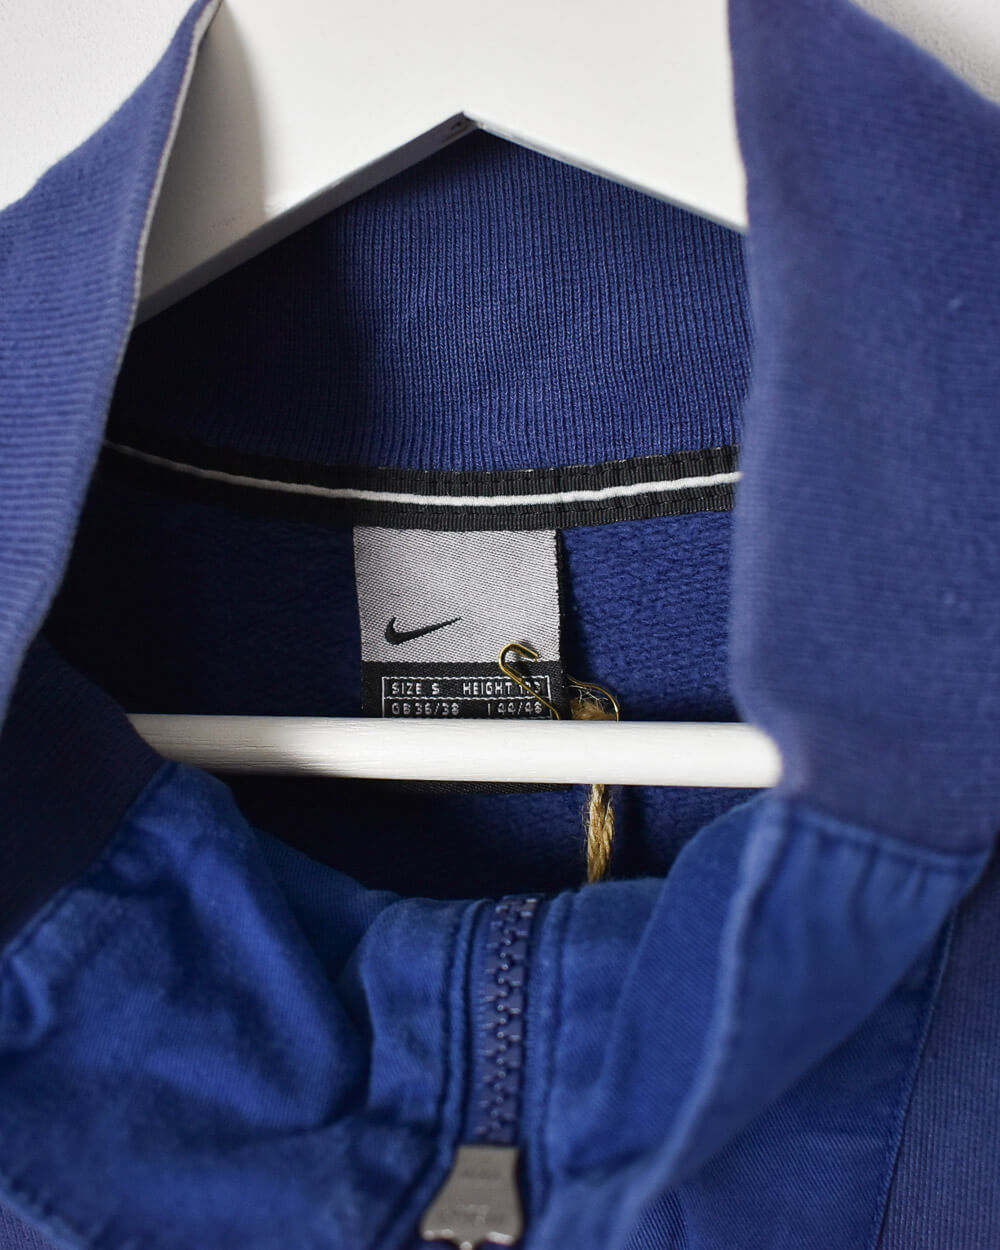 Blue Nike 1/4 Zip Sweatshirt - Small